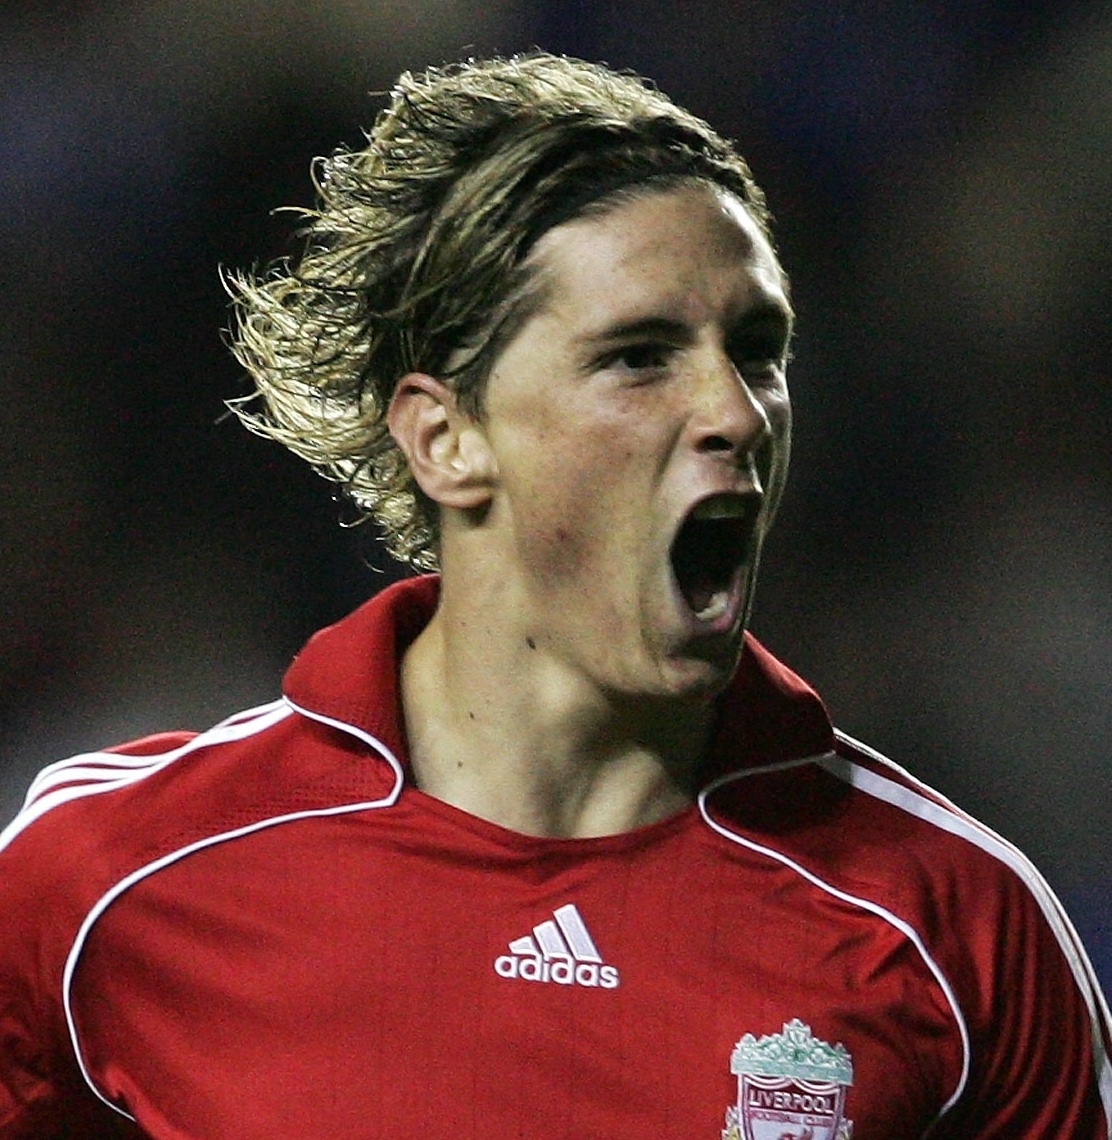   Duet Gerrard Torres Di Liverpool Berita Bola Football News Bola Lover  berita news football